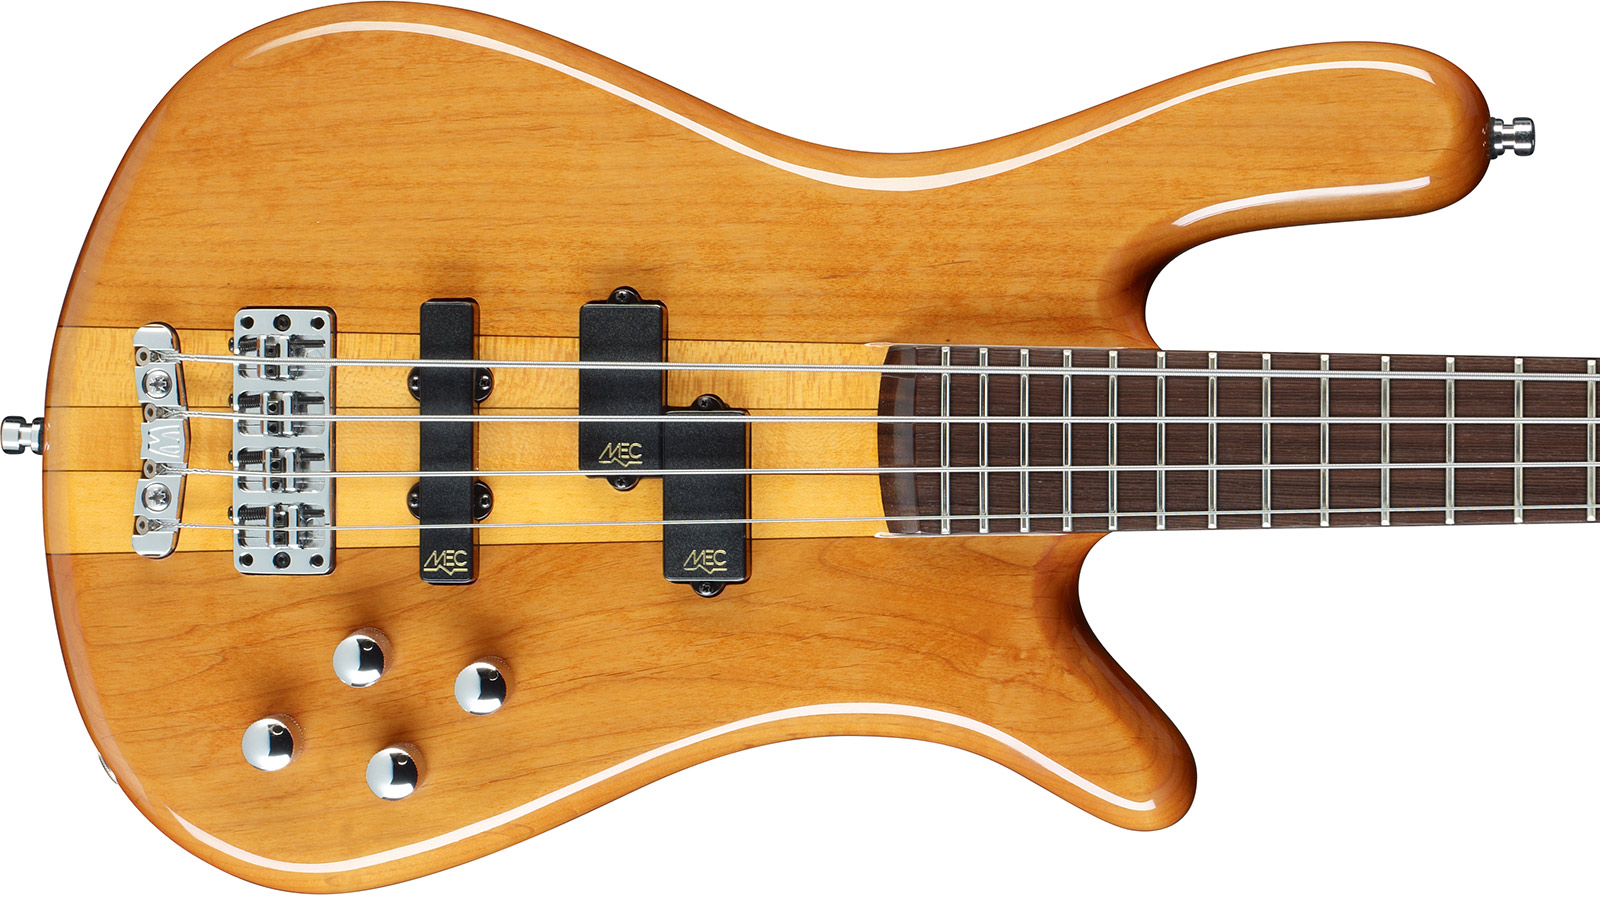 Warwick Streamer Nt4 Rockbass 4c Active Wen - Honey Violin - Solid body electric bass - Variation 1